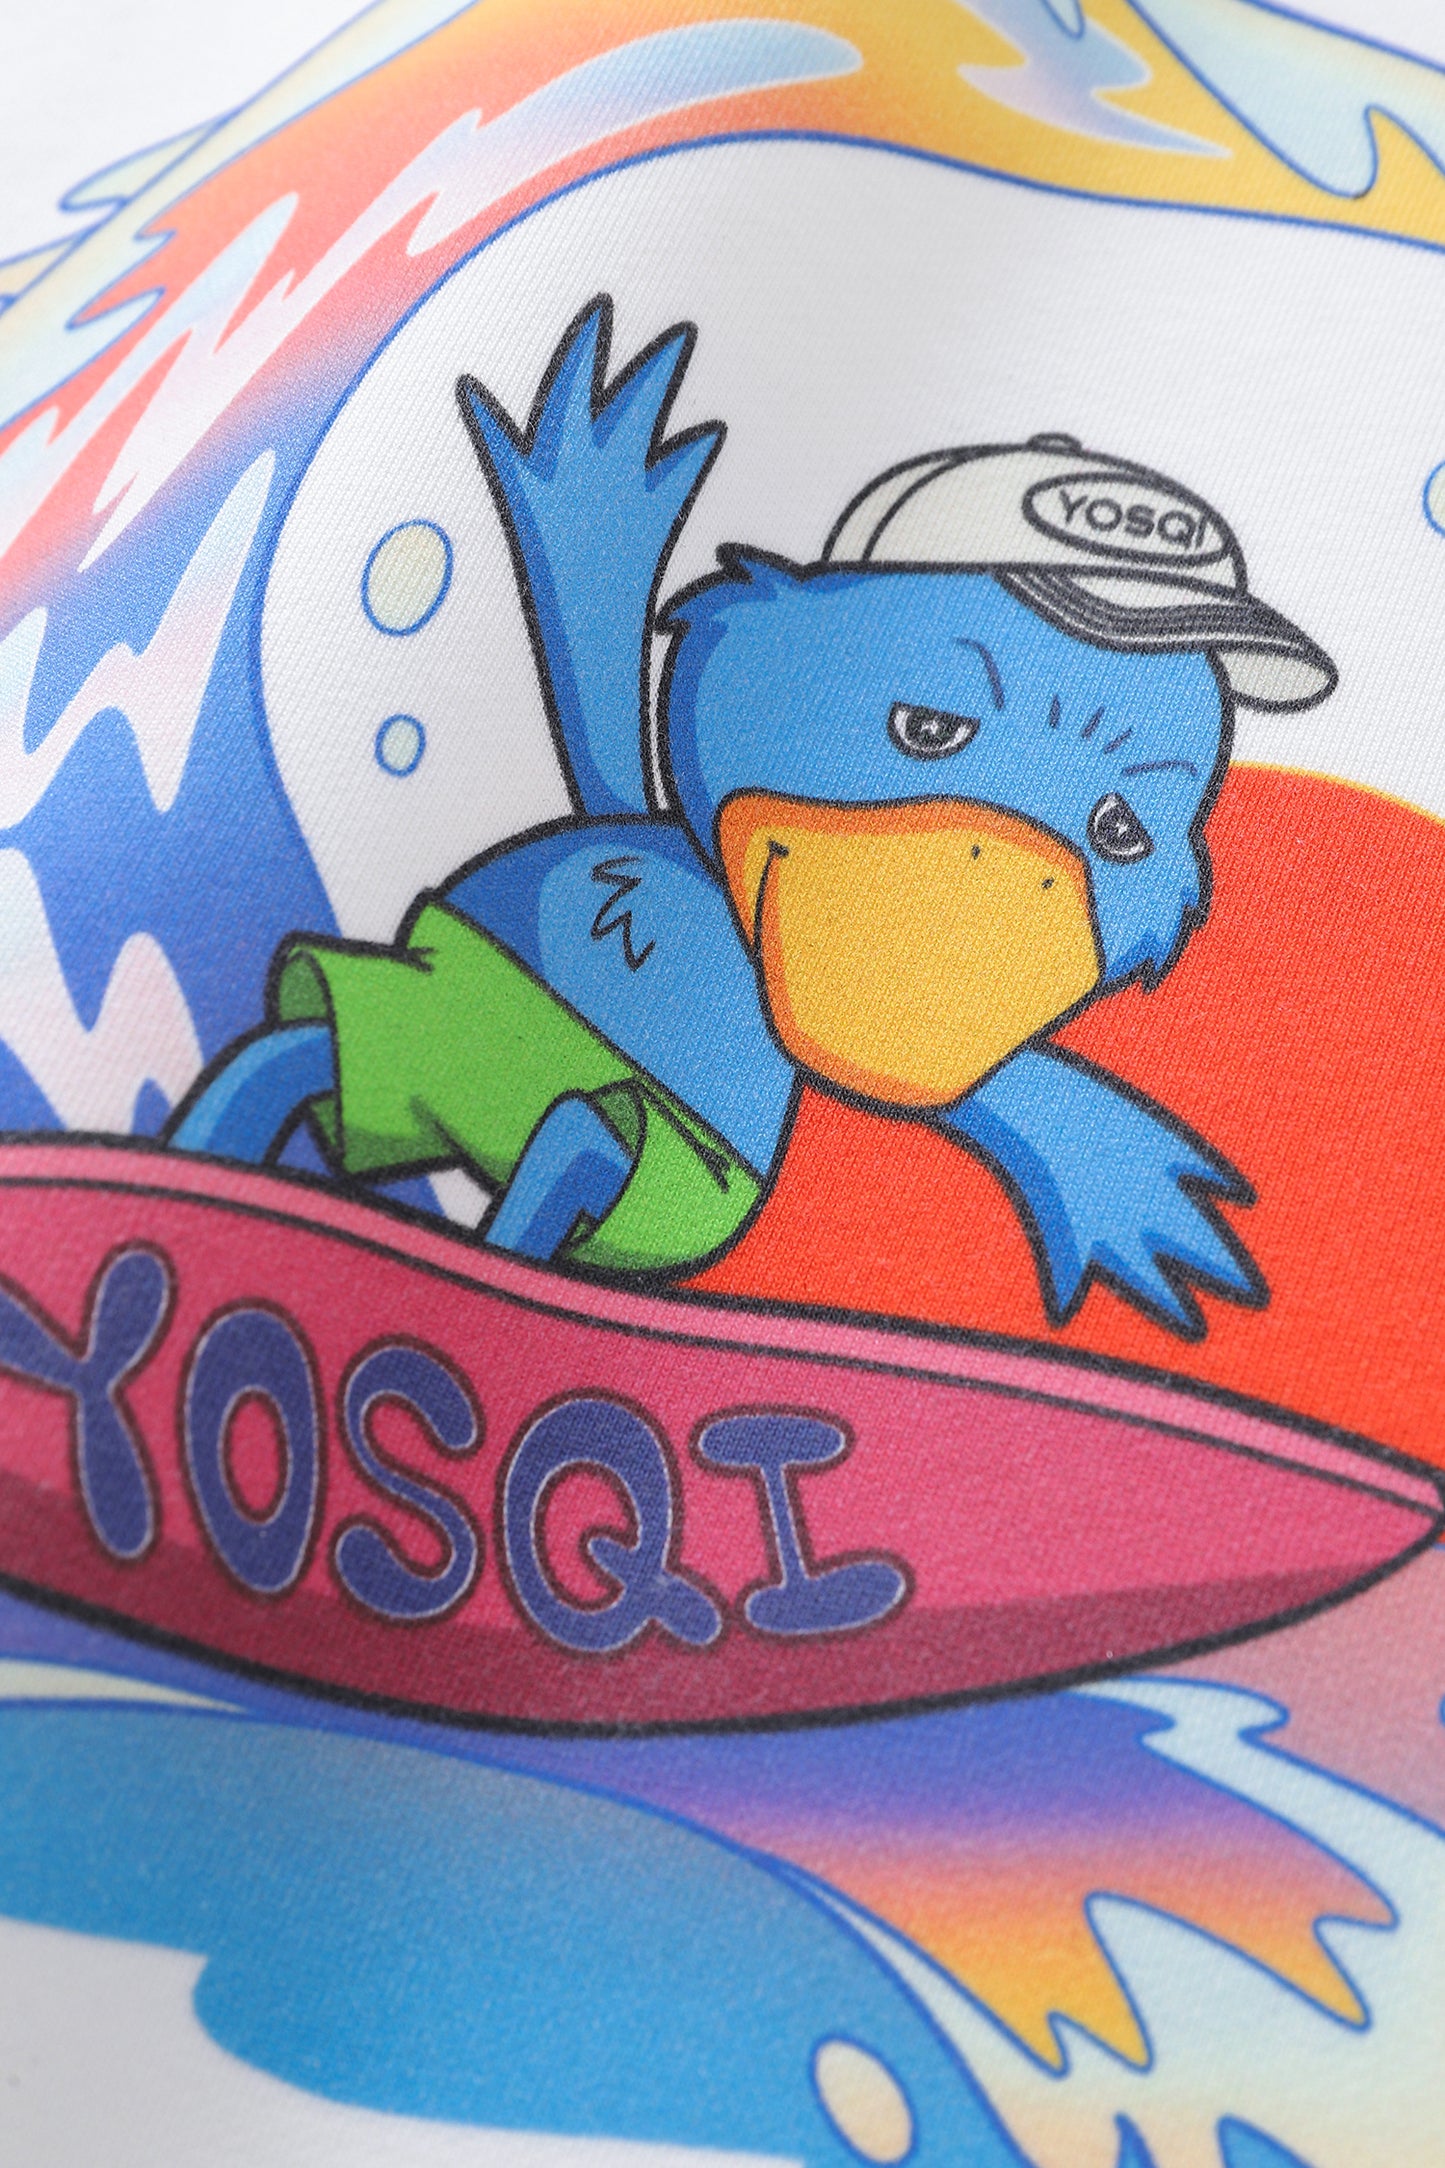 Yosqi Mascot Surfer-Dubai Edition